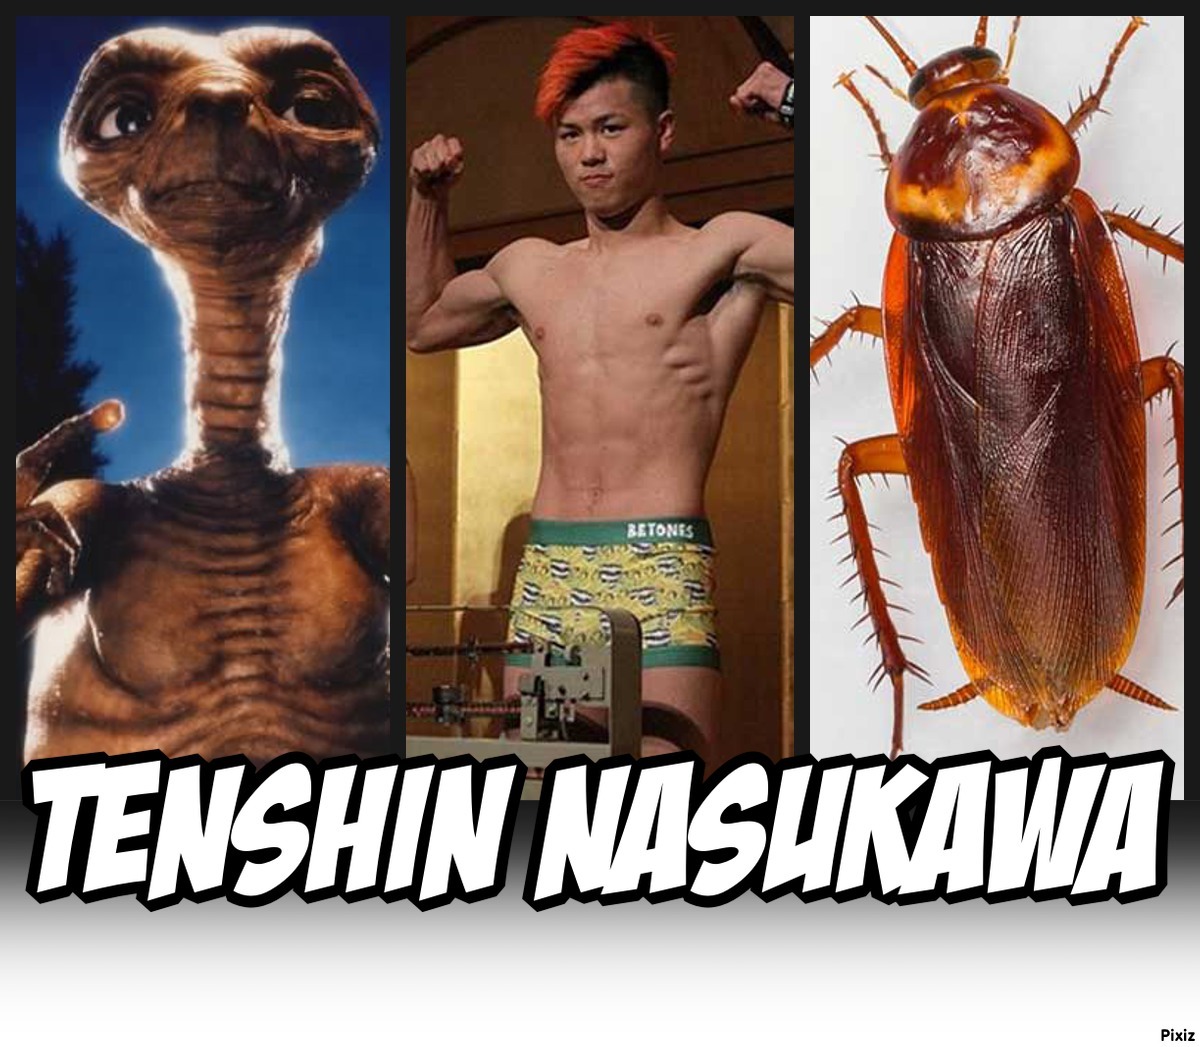 Tenshin Nasukawa, el rival de Floyd Mayweather